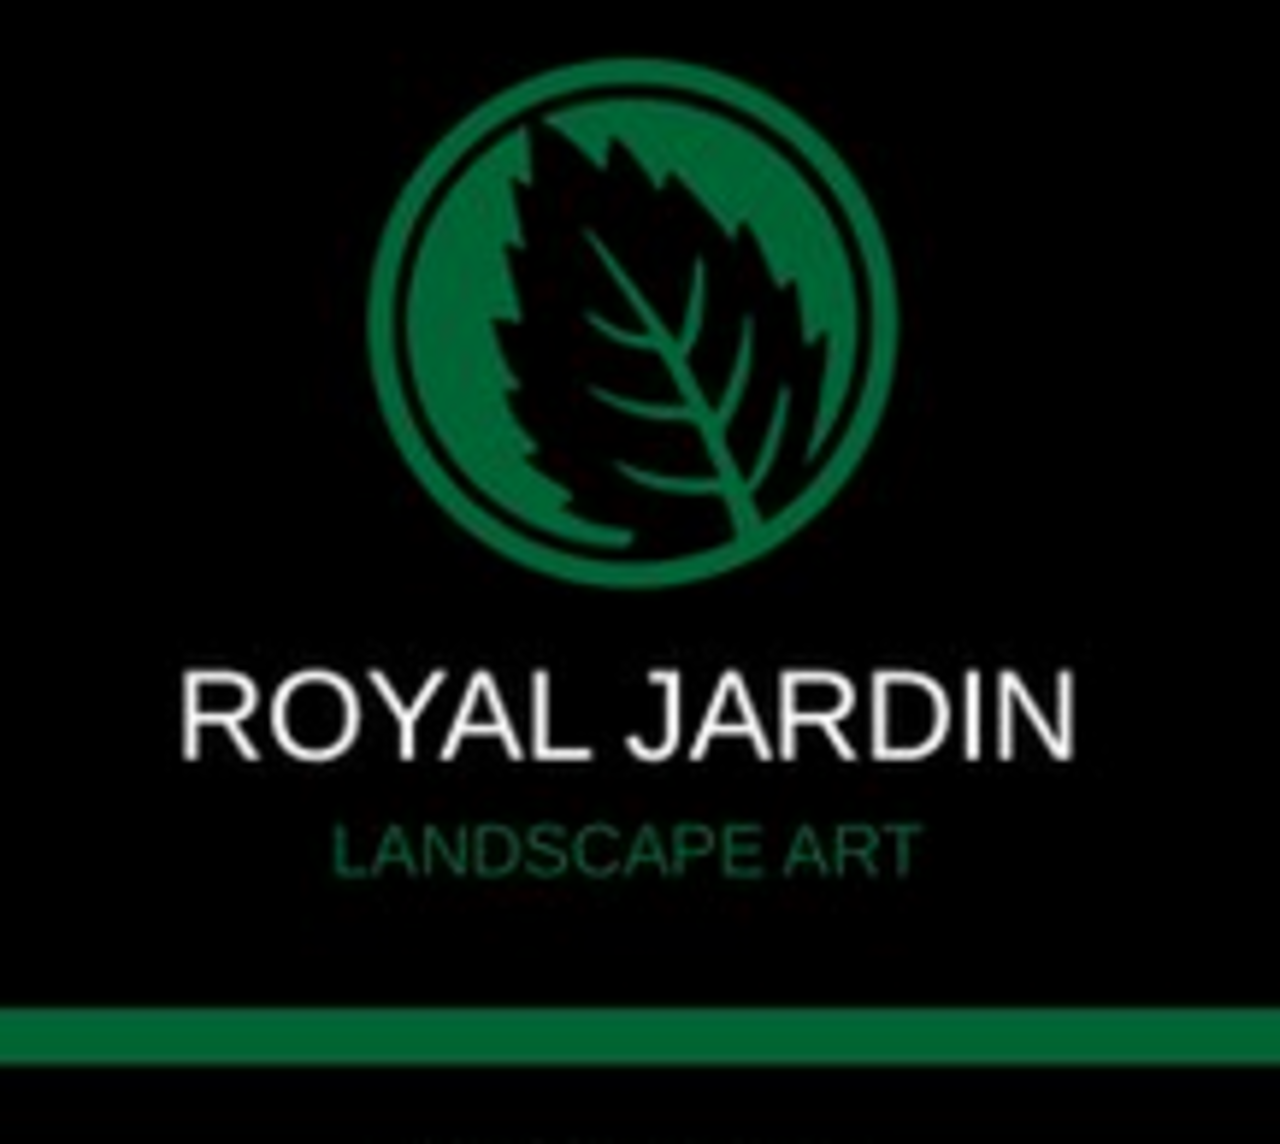 Royal Jardin's logo